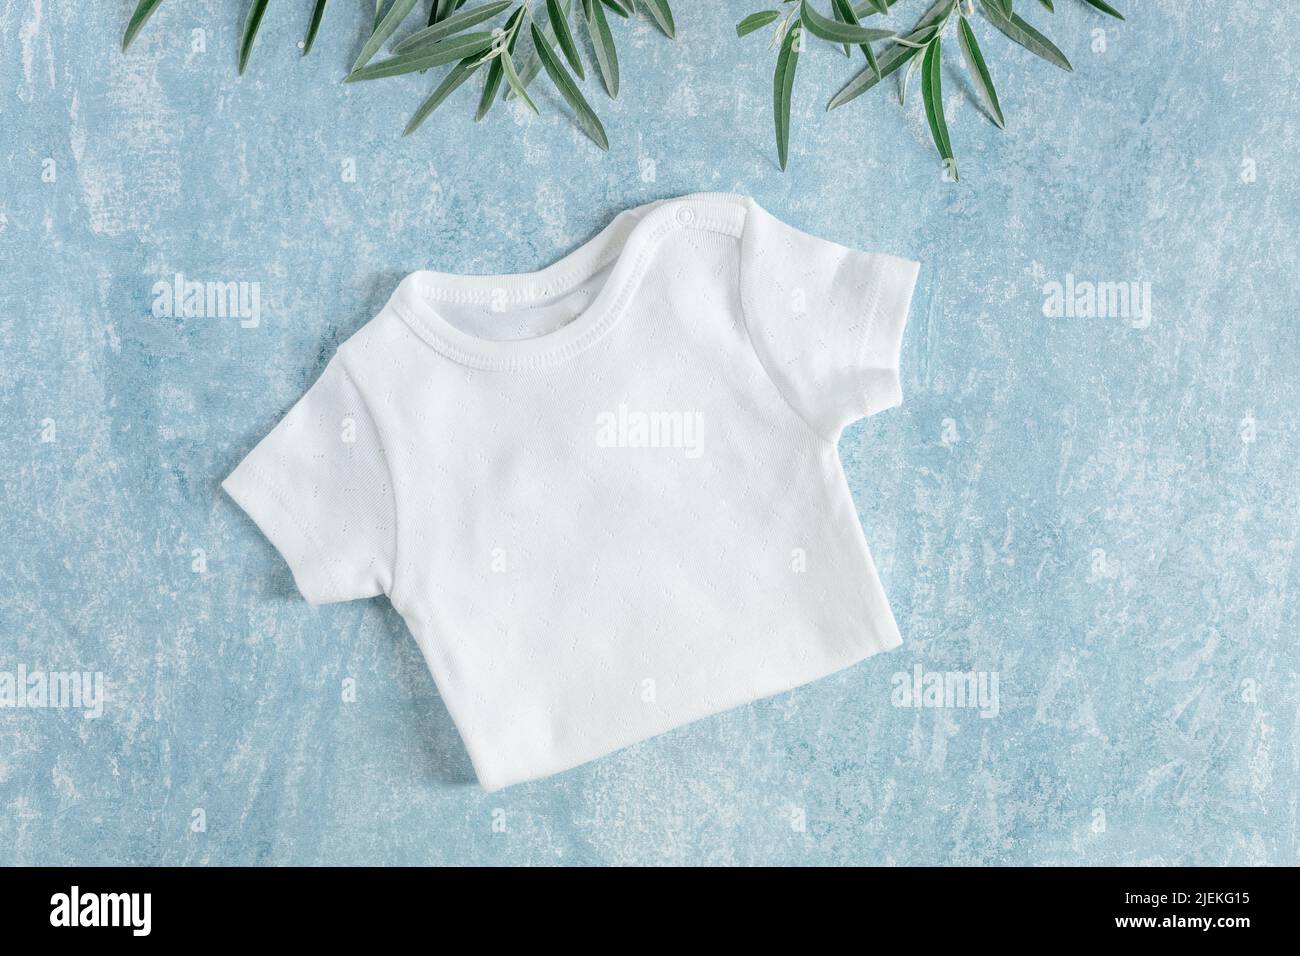 white baby clothes, newborn baby costume mockup Stock Photo